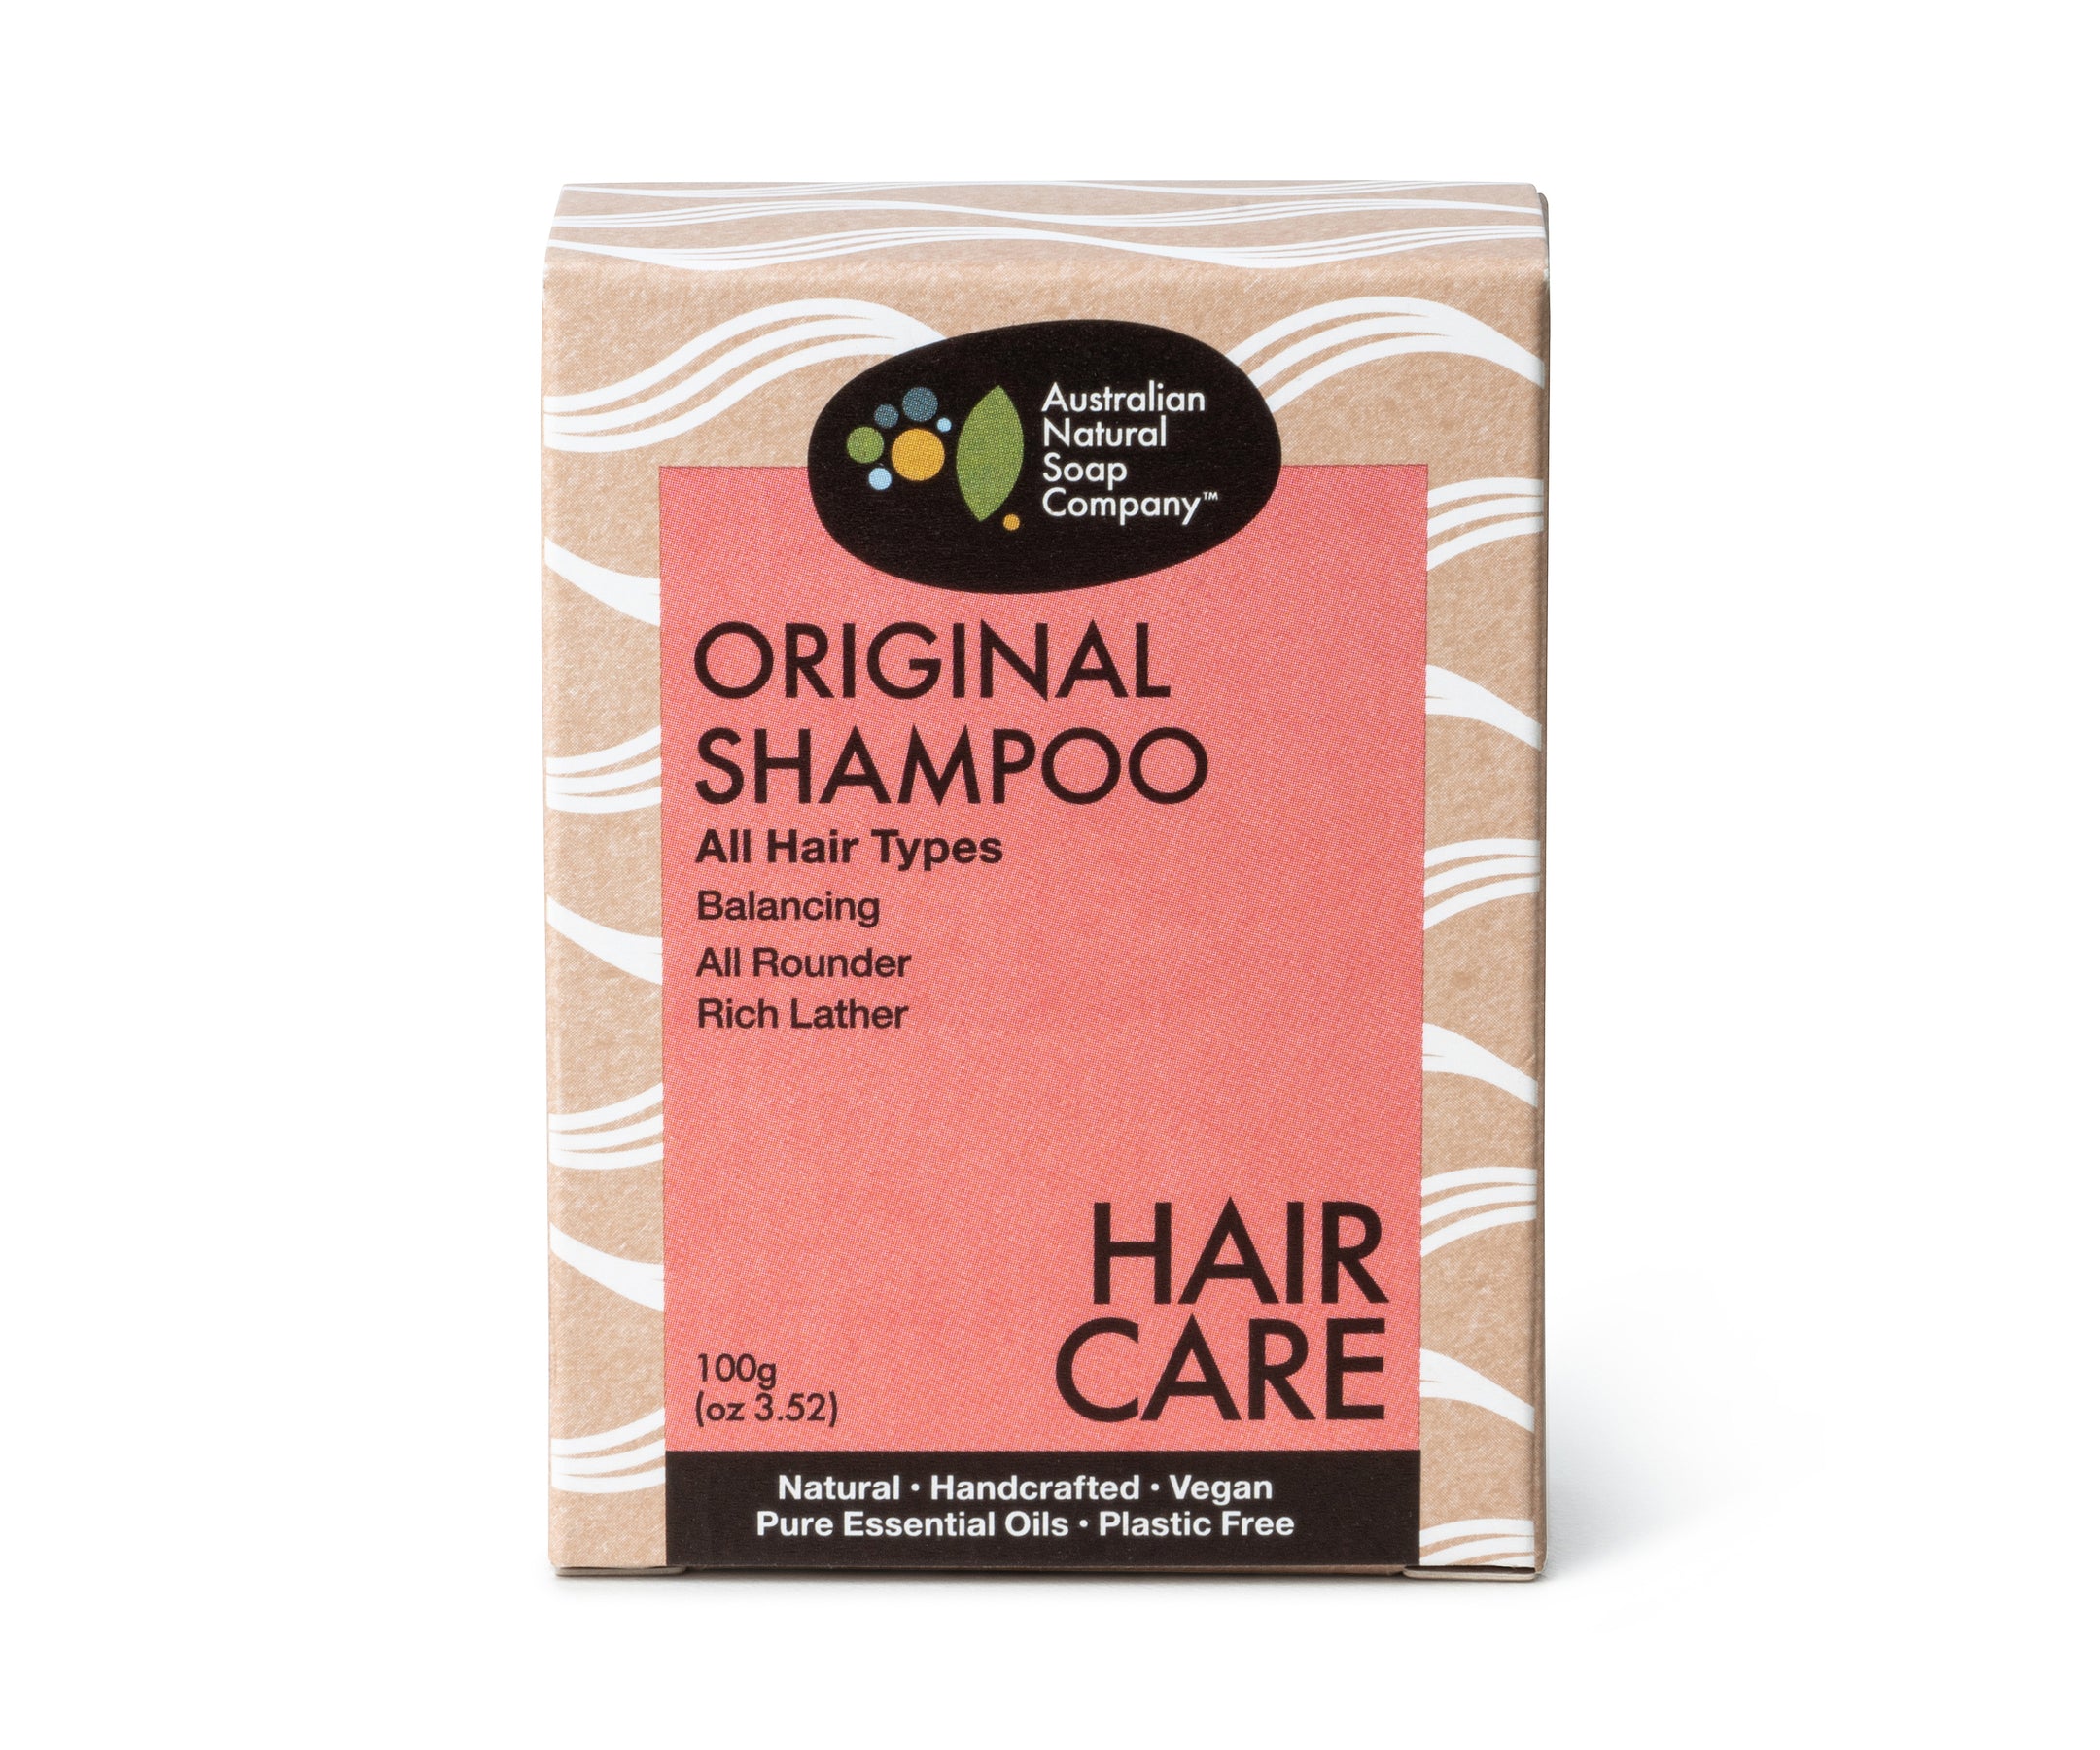 Australian Natural Soap Company - Shampoo Bar (Original) - All Hair Types (100g)